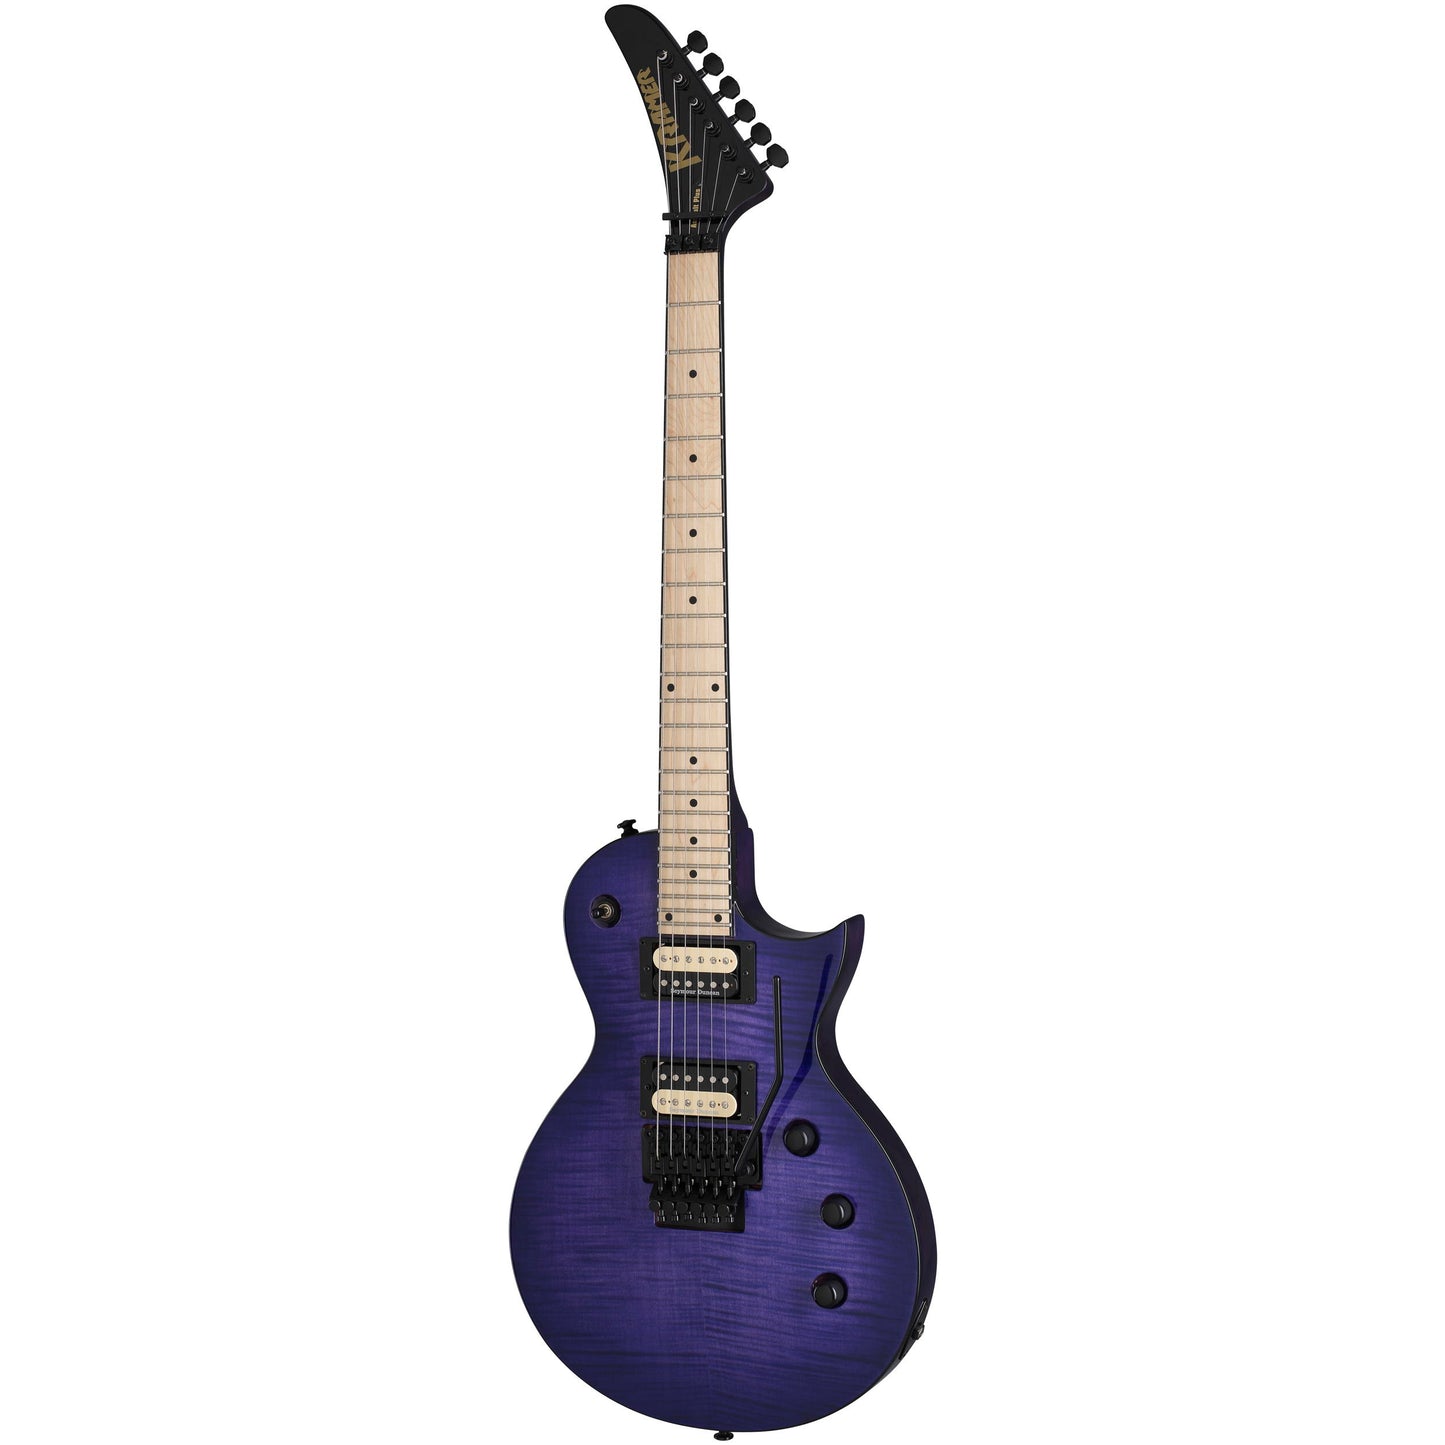 Kramer Assault Plus Electric Guitar, Transparent Purple Burst